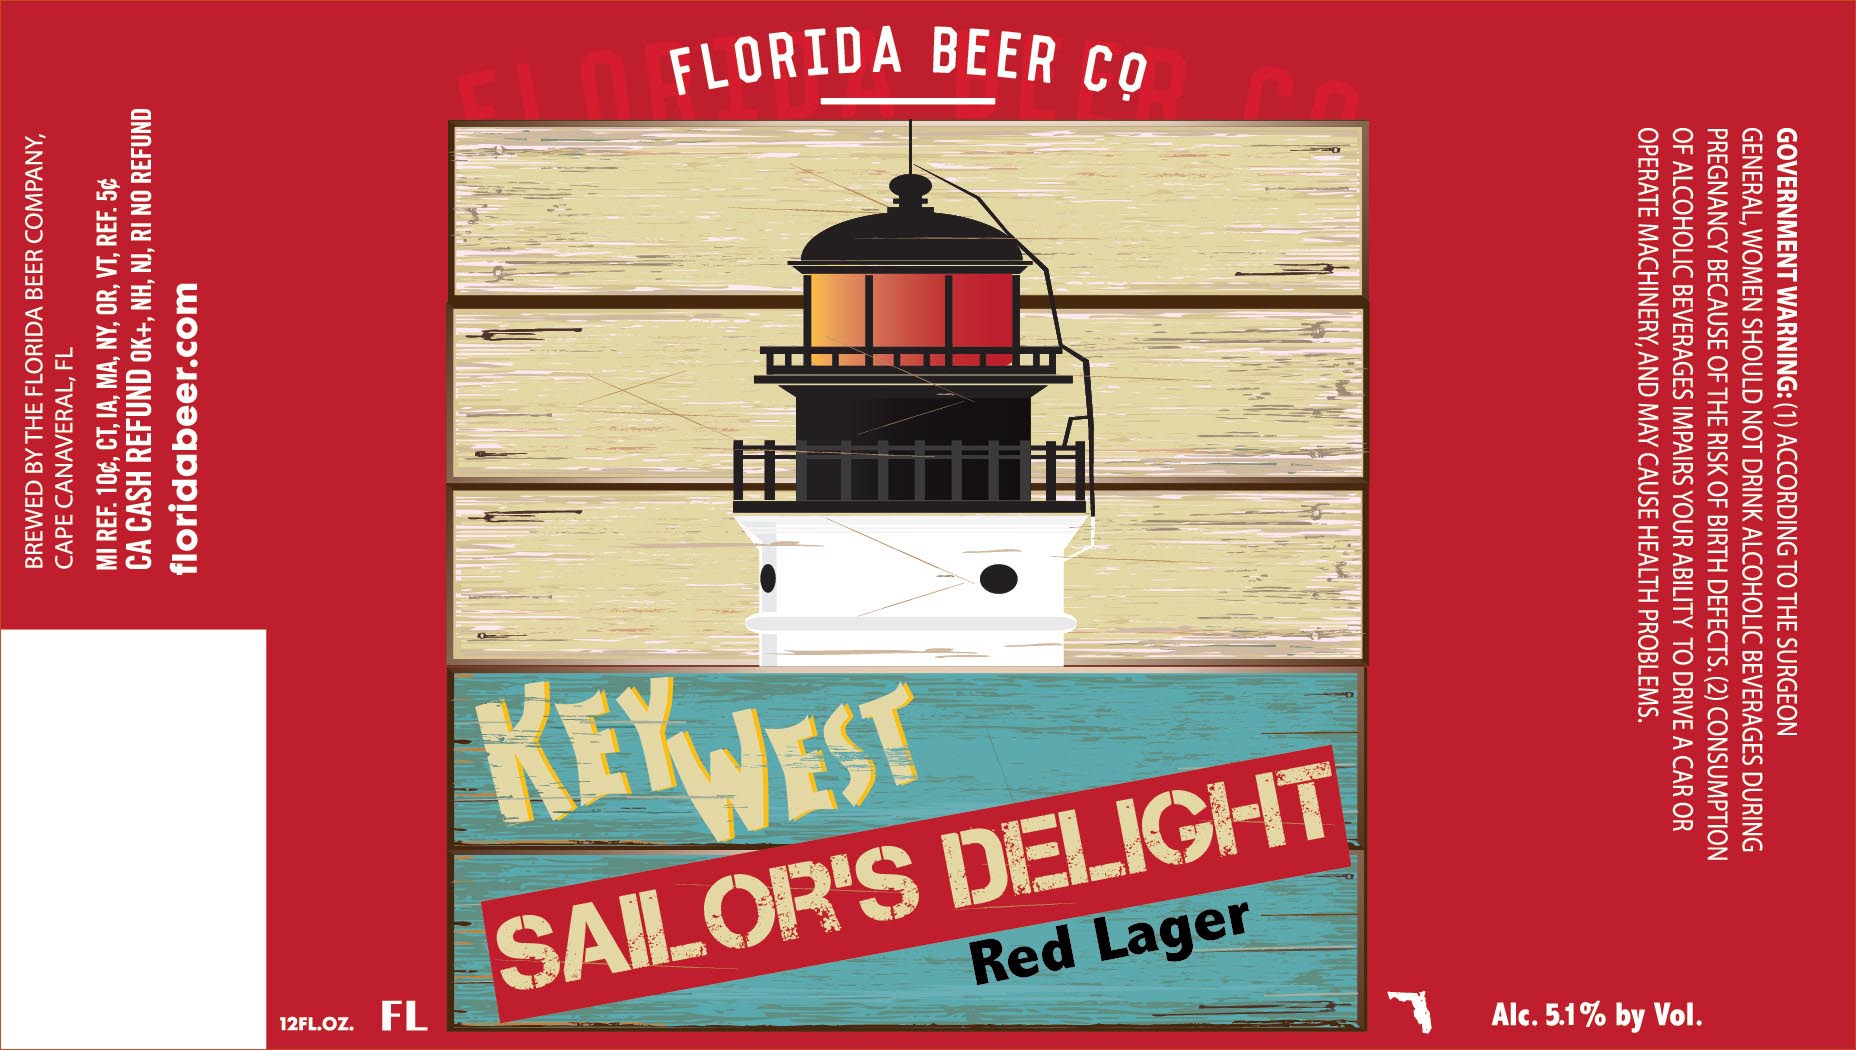 Florida Beer Key West Sailor's Delight